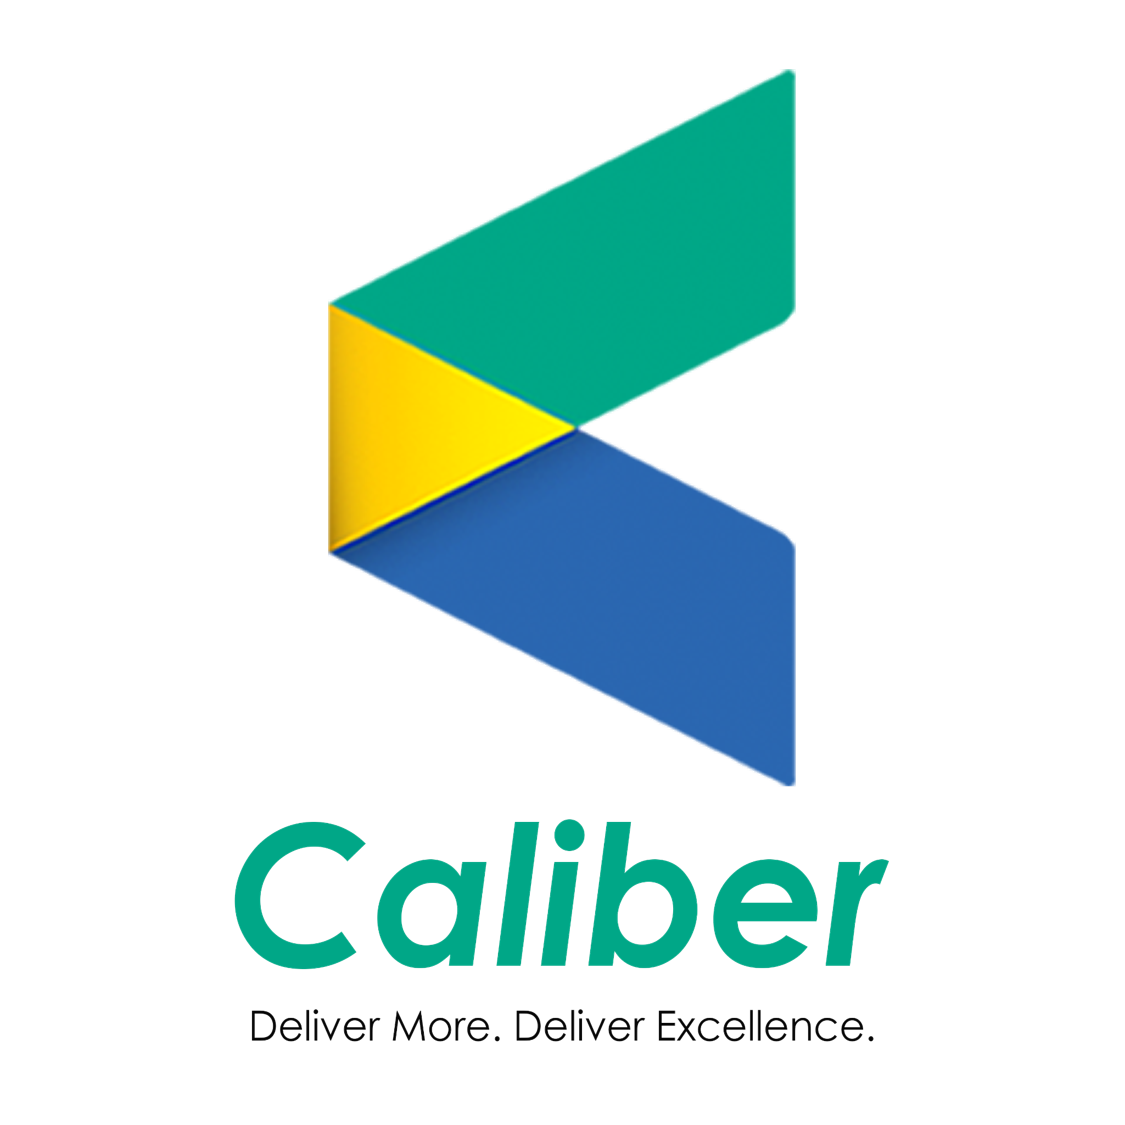 Caliber technologies